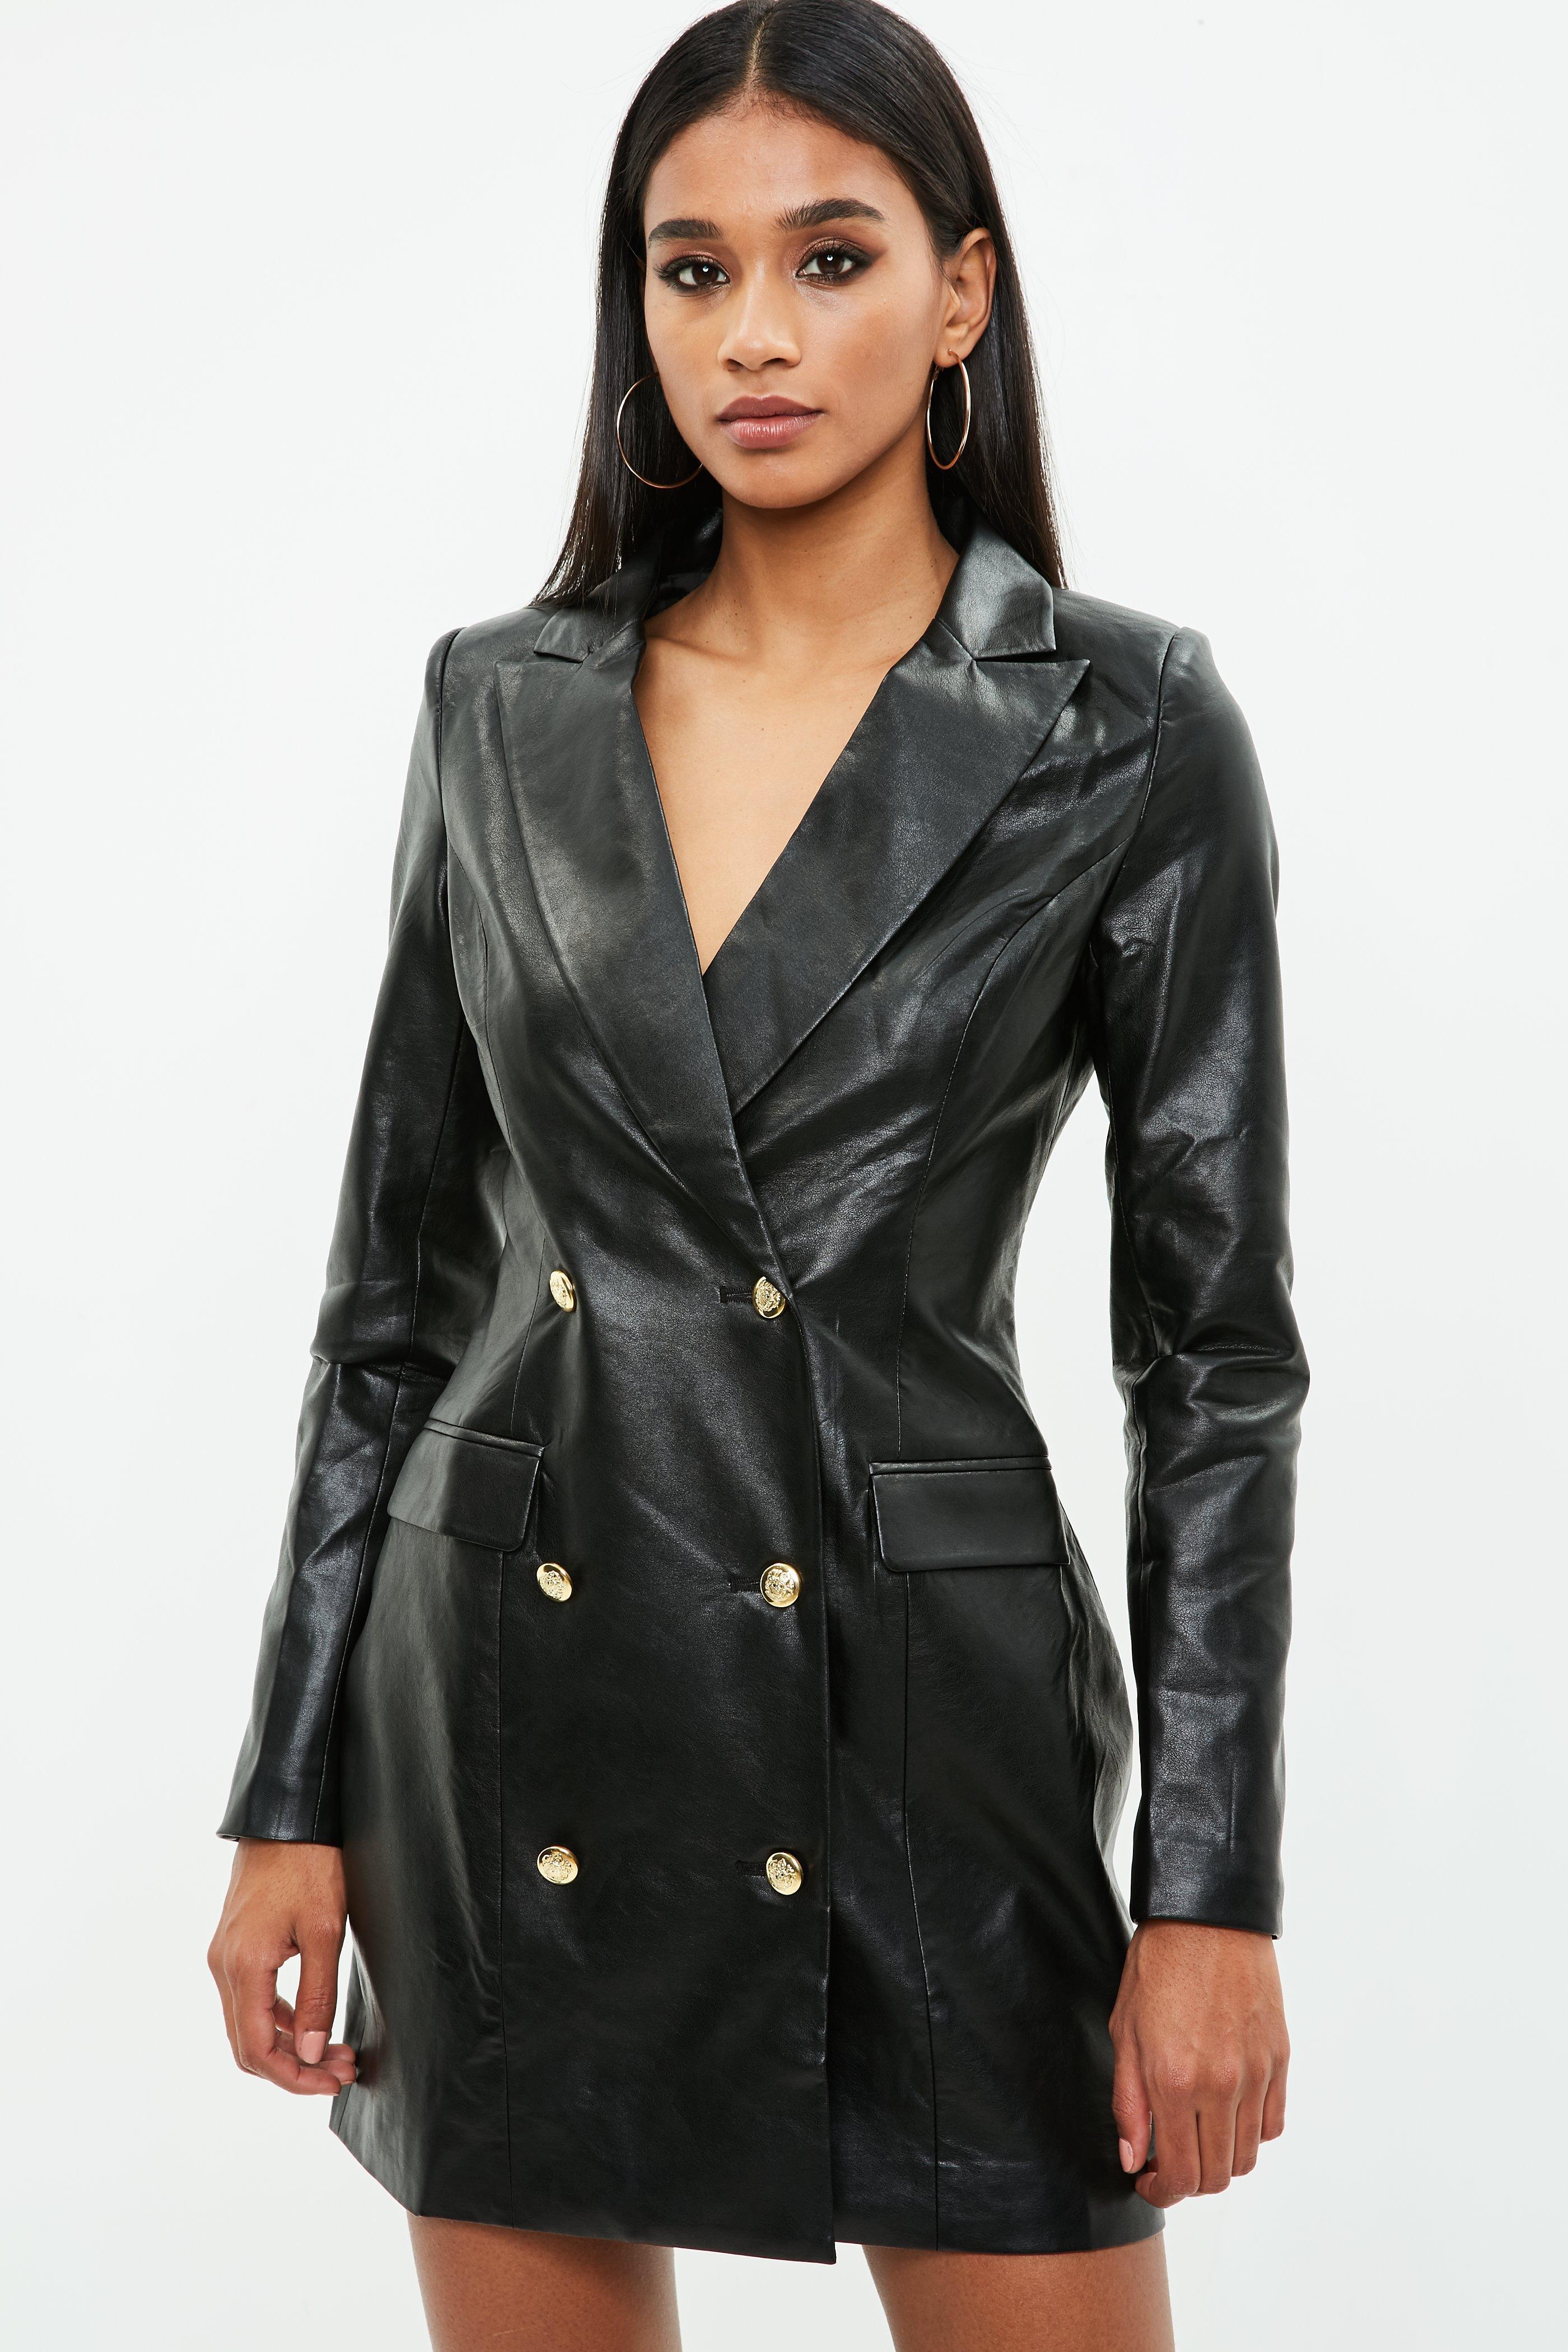 Missguided Black Faux Leather Blazer Dress - Lyst